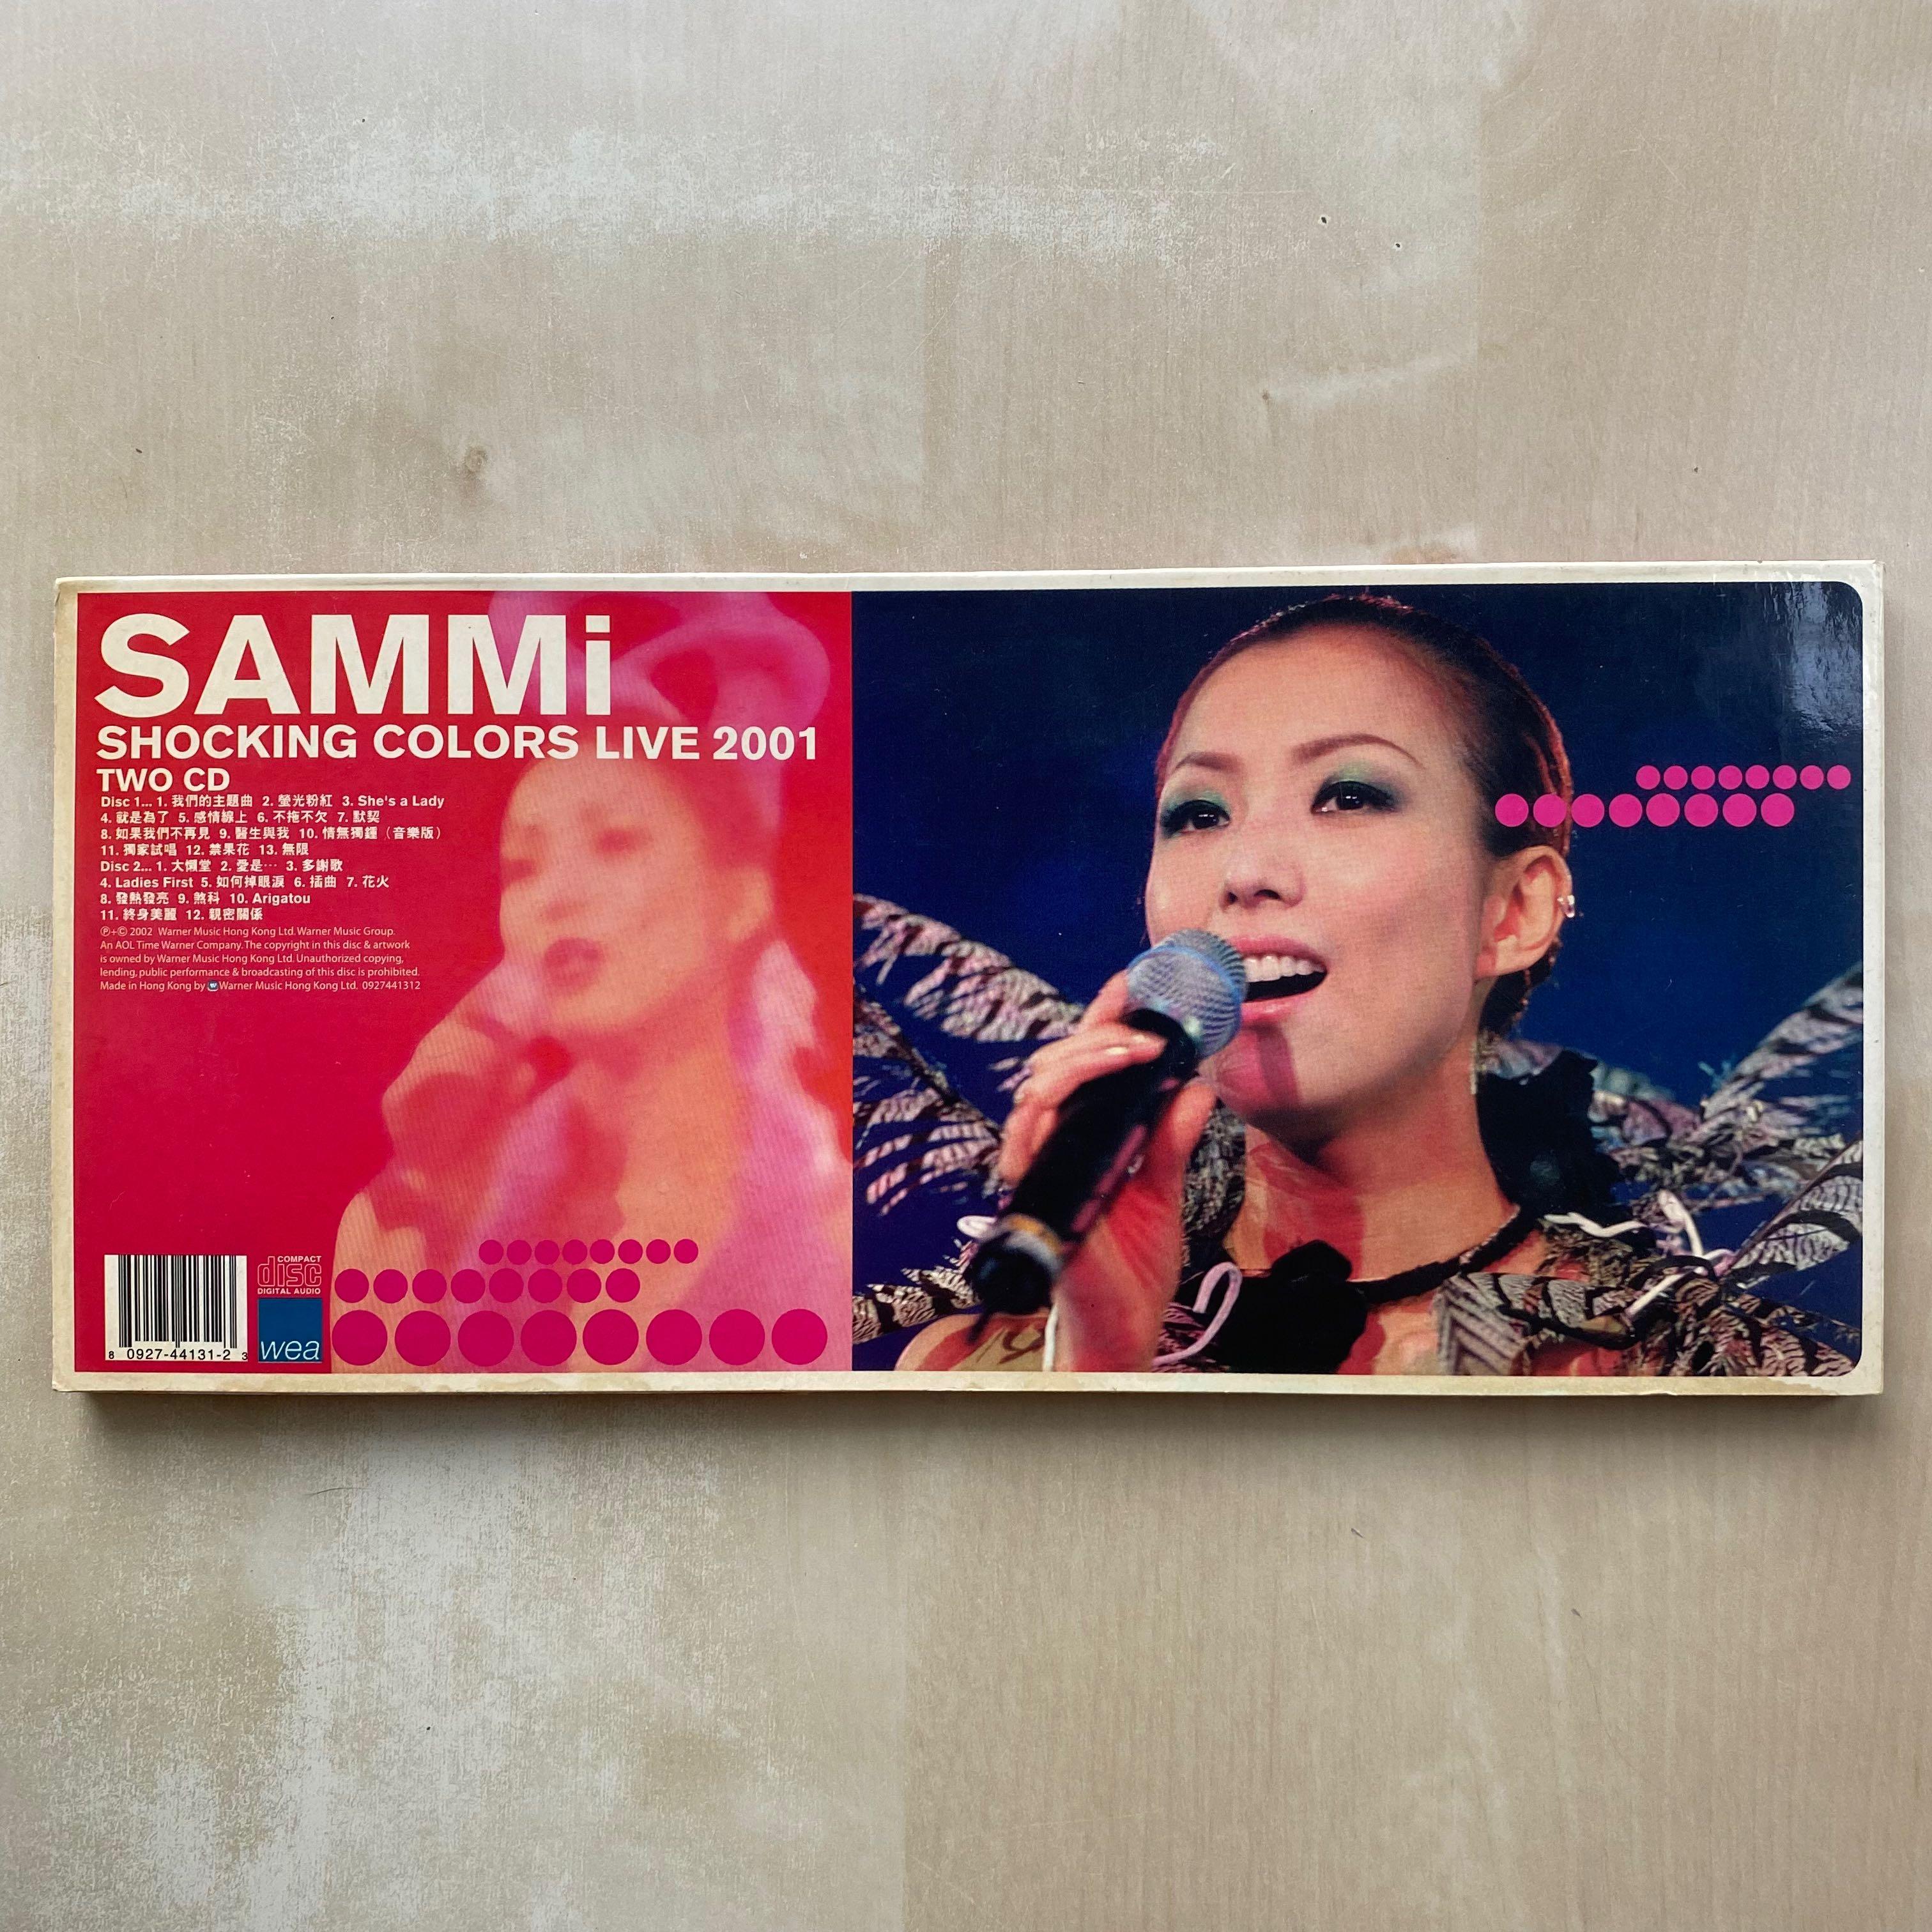 CD丨鄭秀文Sammi Shocking Colors Live 2001 (Promotional Copy) (2CD 